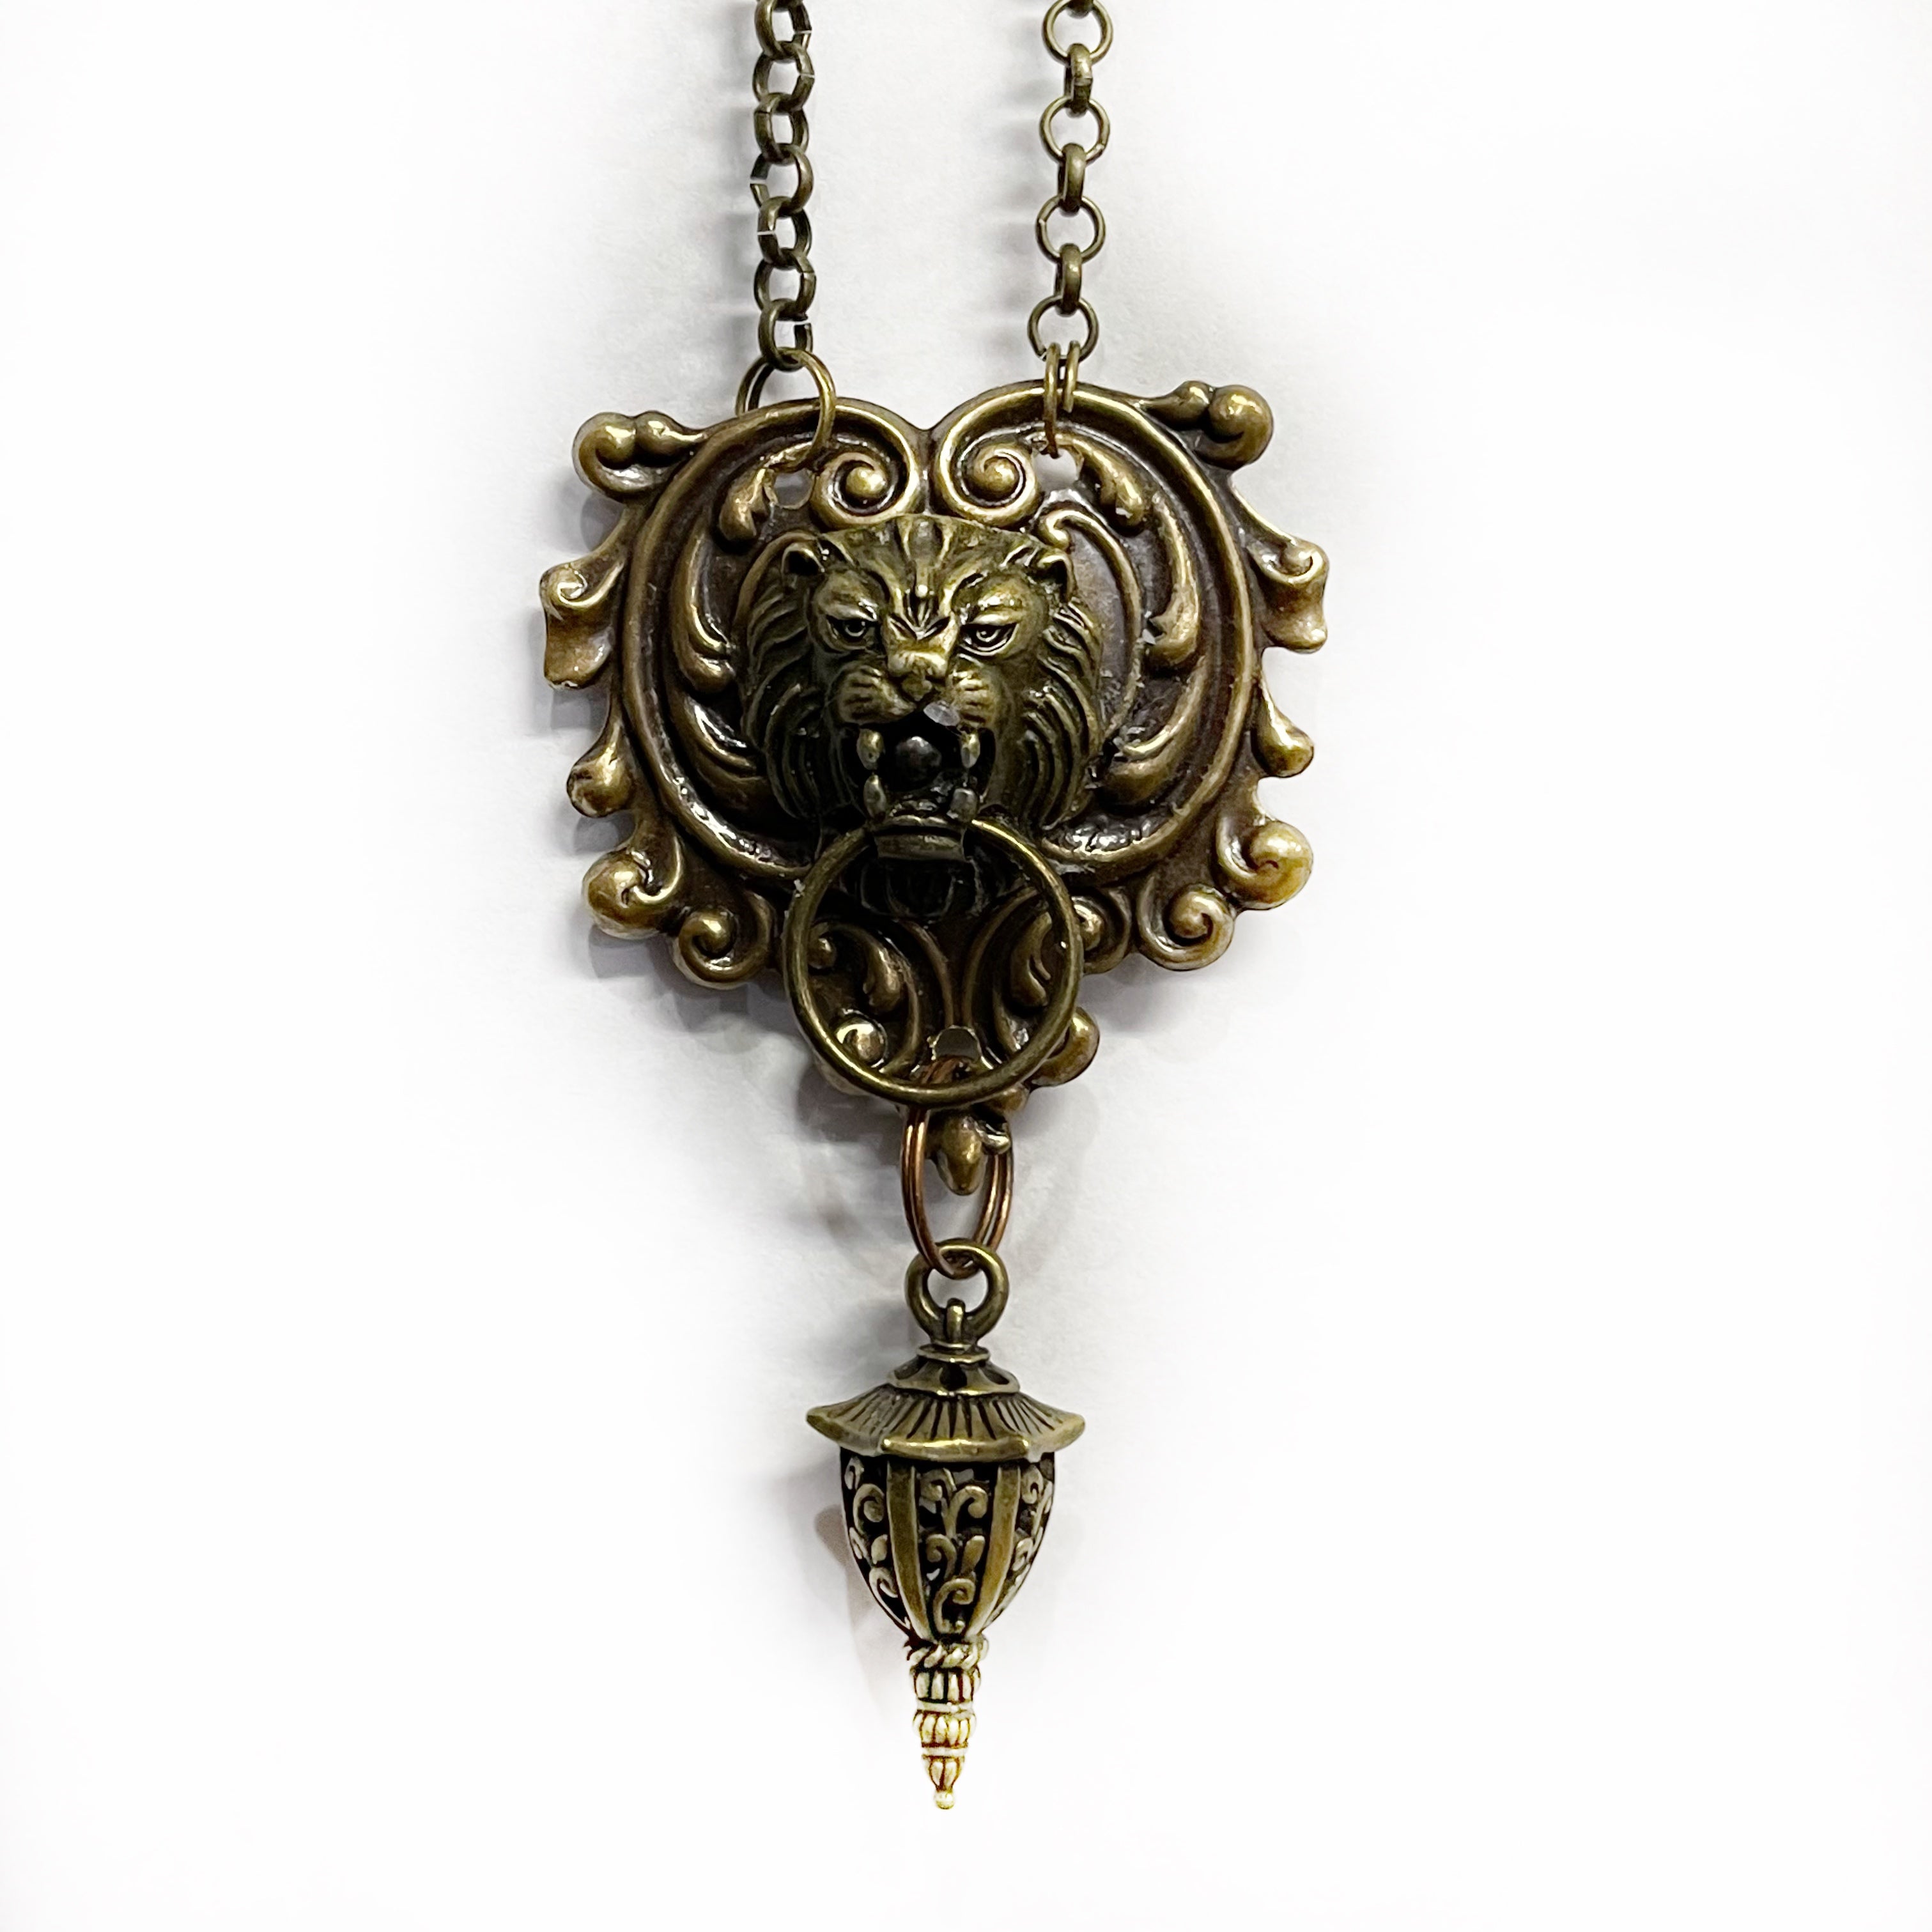 lion doorknocker necklace in bronze with hanging lantern charm vintage